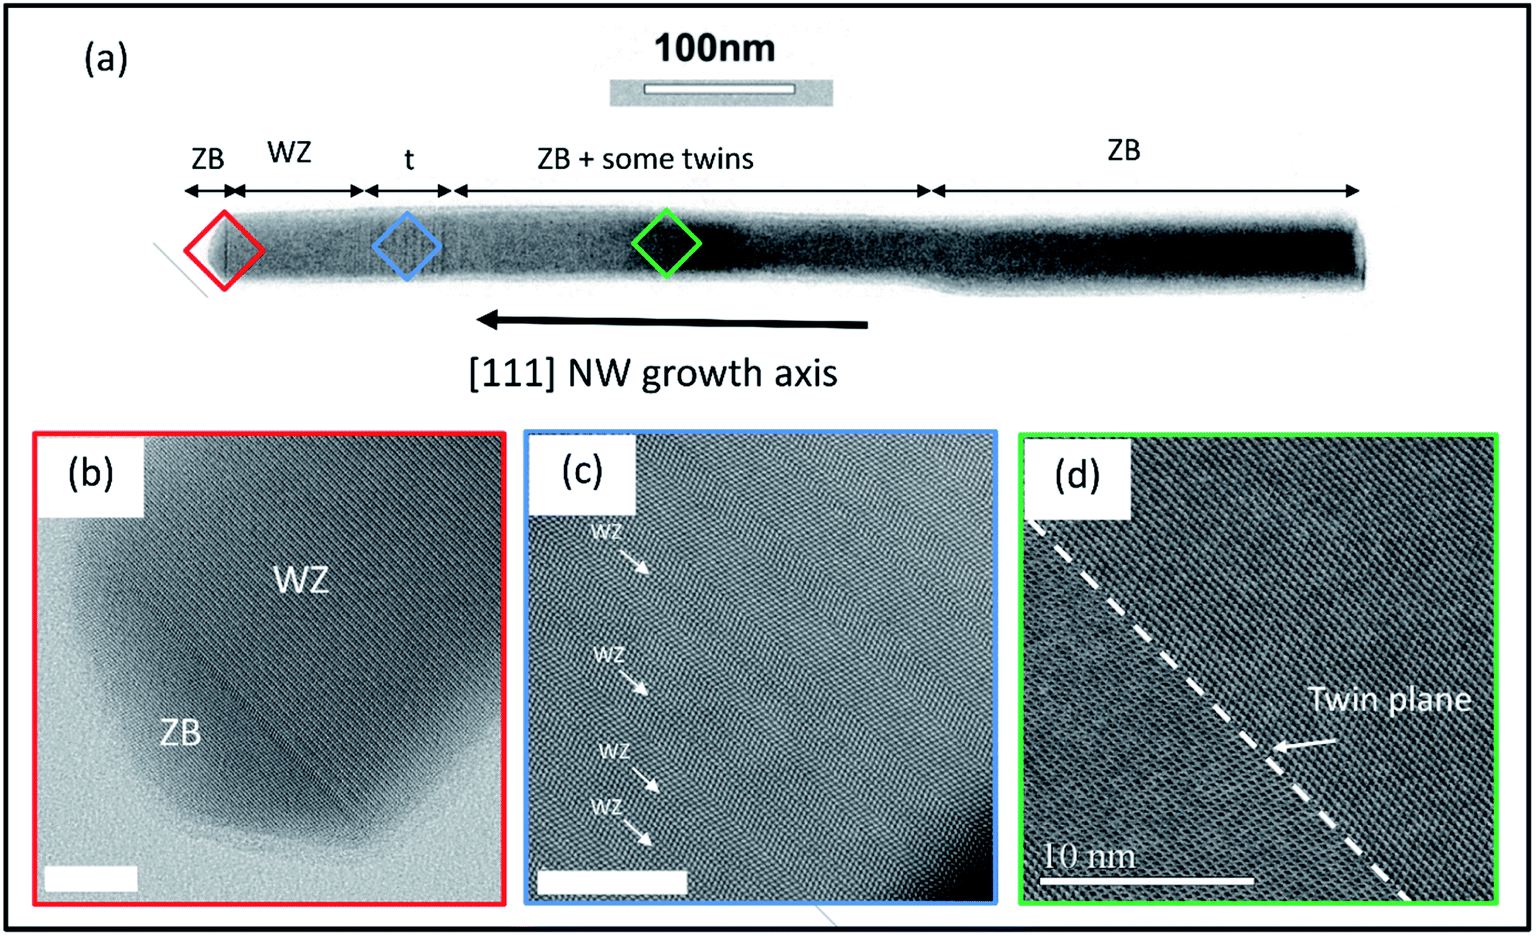 Crystal Phase Engineering Of Self Catalyzed Gaas Nanowires Using A Rheed Diagram Nanoscale Advances Rsc Publishing Doi 10 1039 D0naa